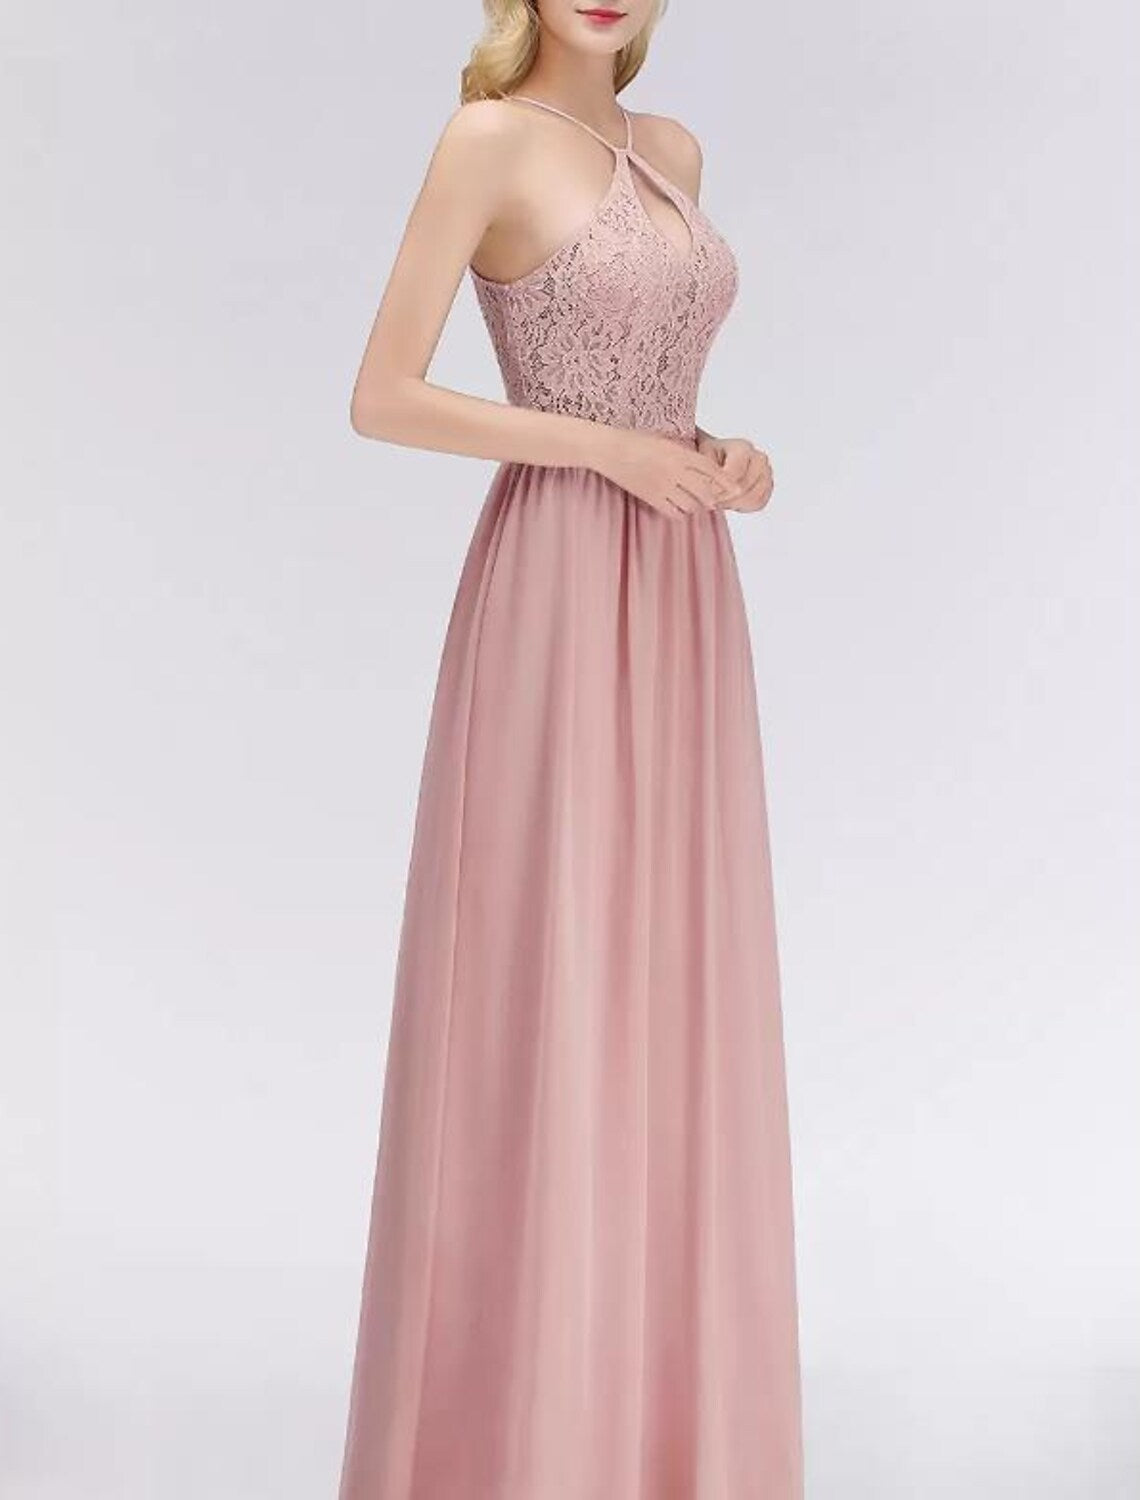 Prom Dresses Dress Engagement Floor Length Sleeveless Chiffon Sleek Lace Insert